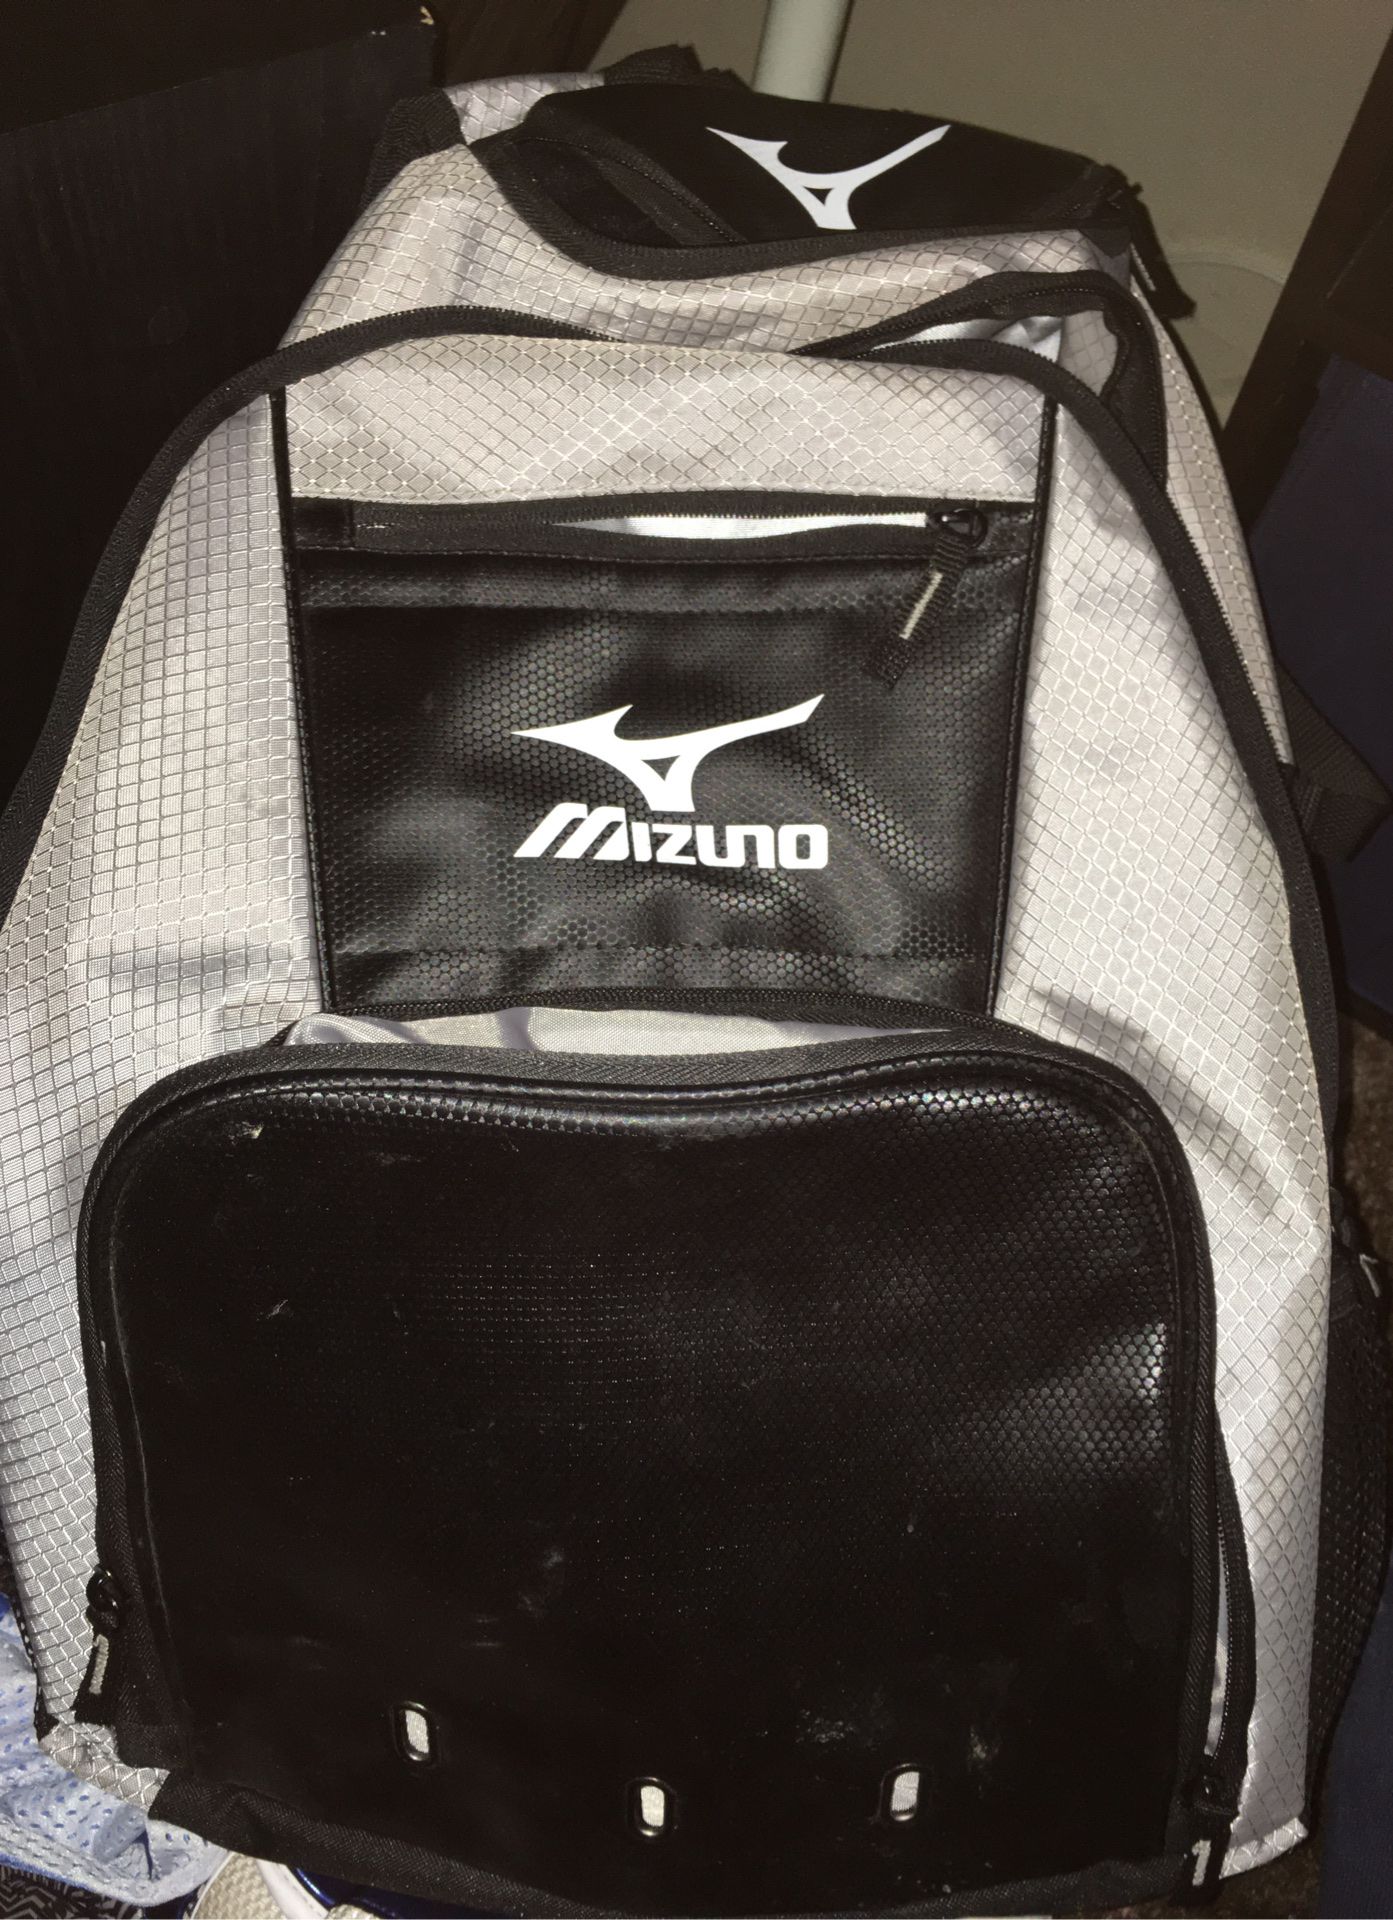 Mizuno Baseball backpack